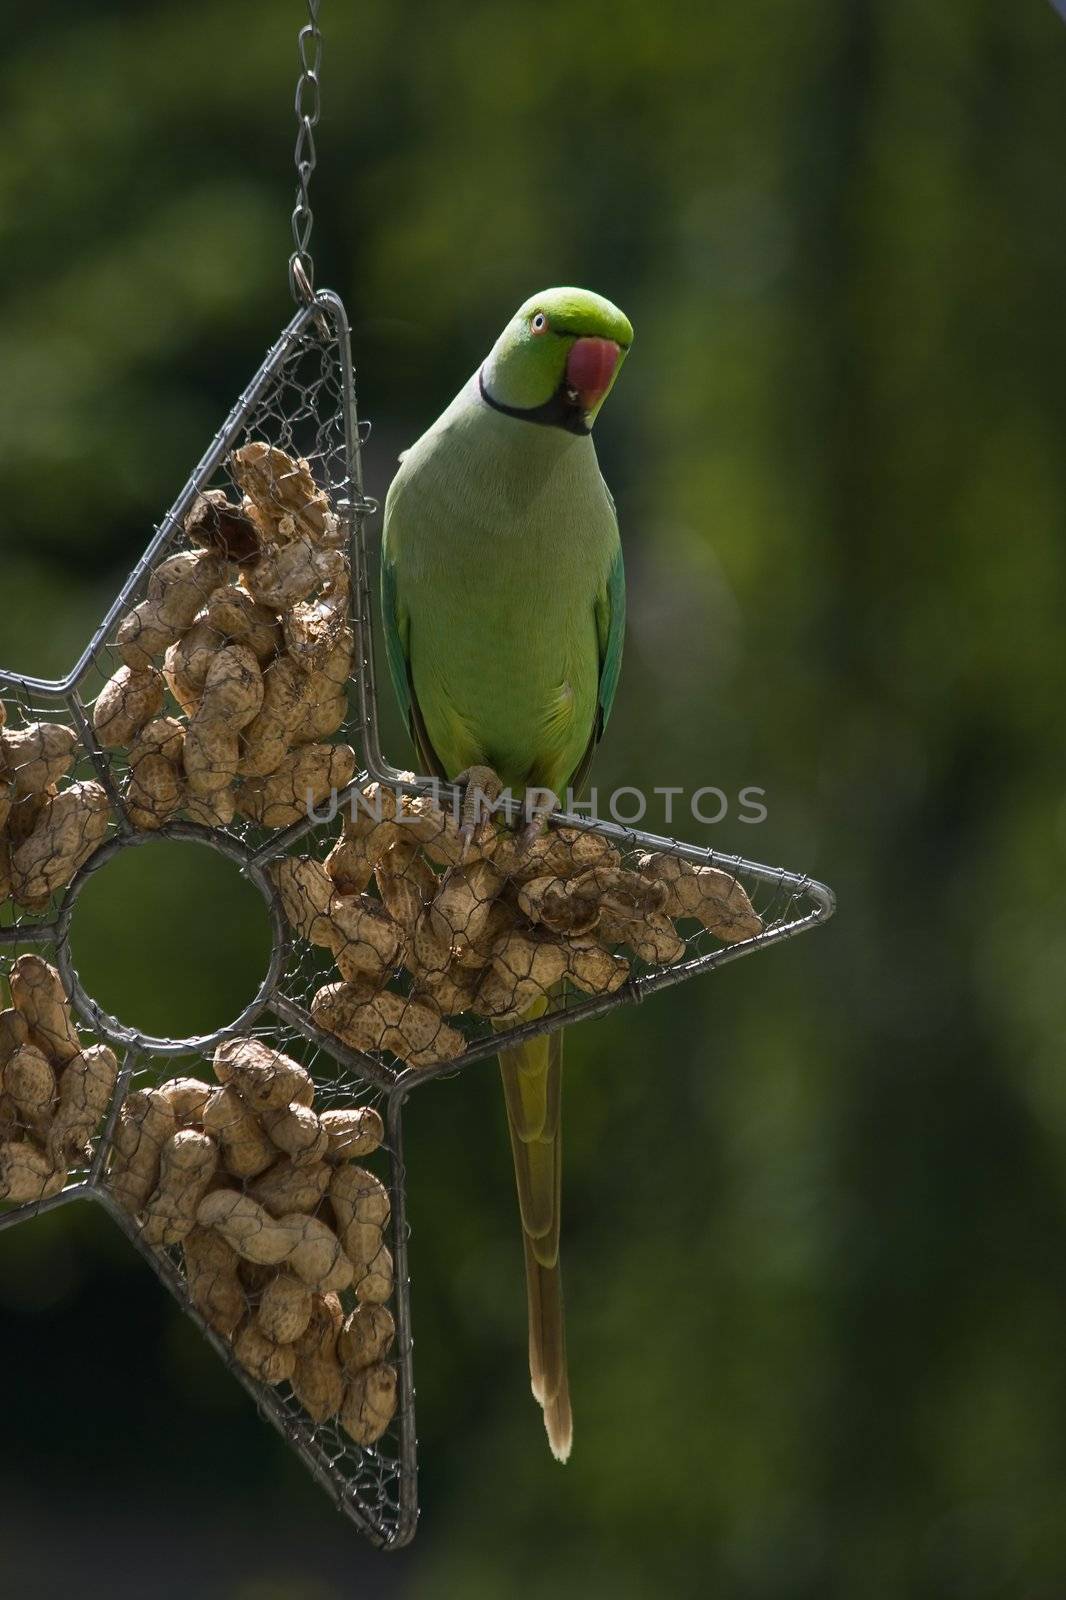 Ringnecked parakeet on feeding hanger by Colette